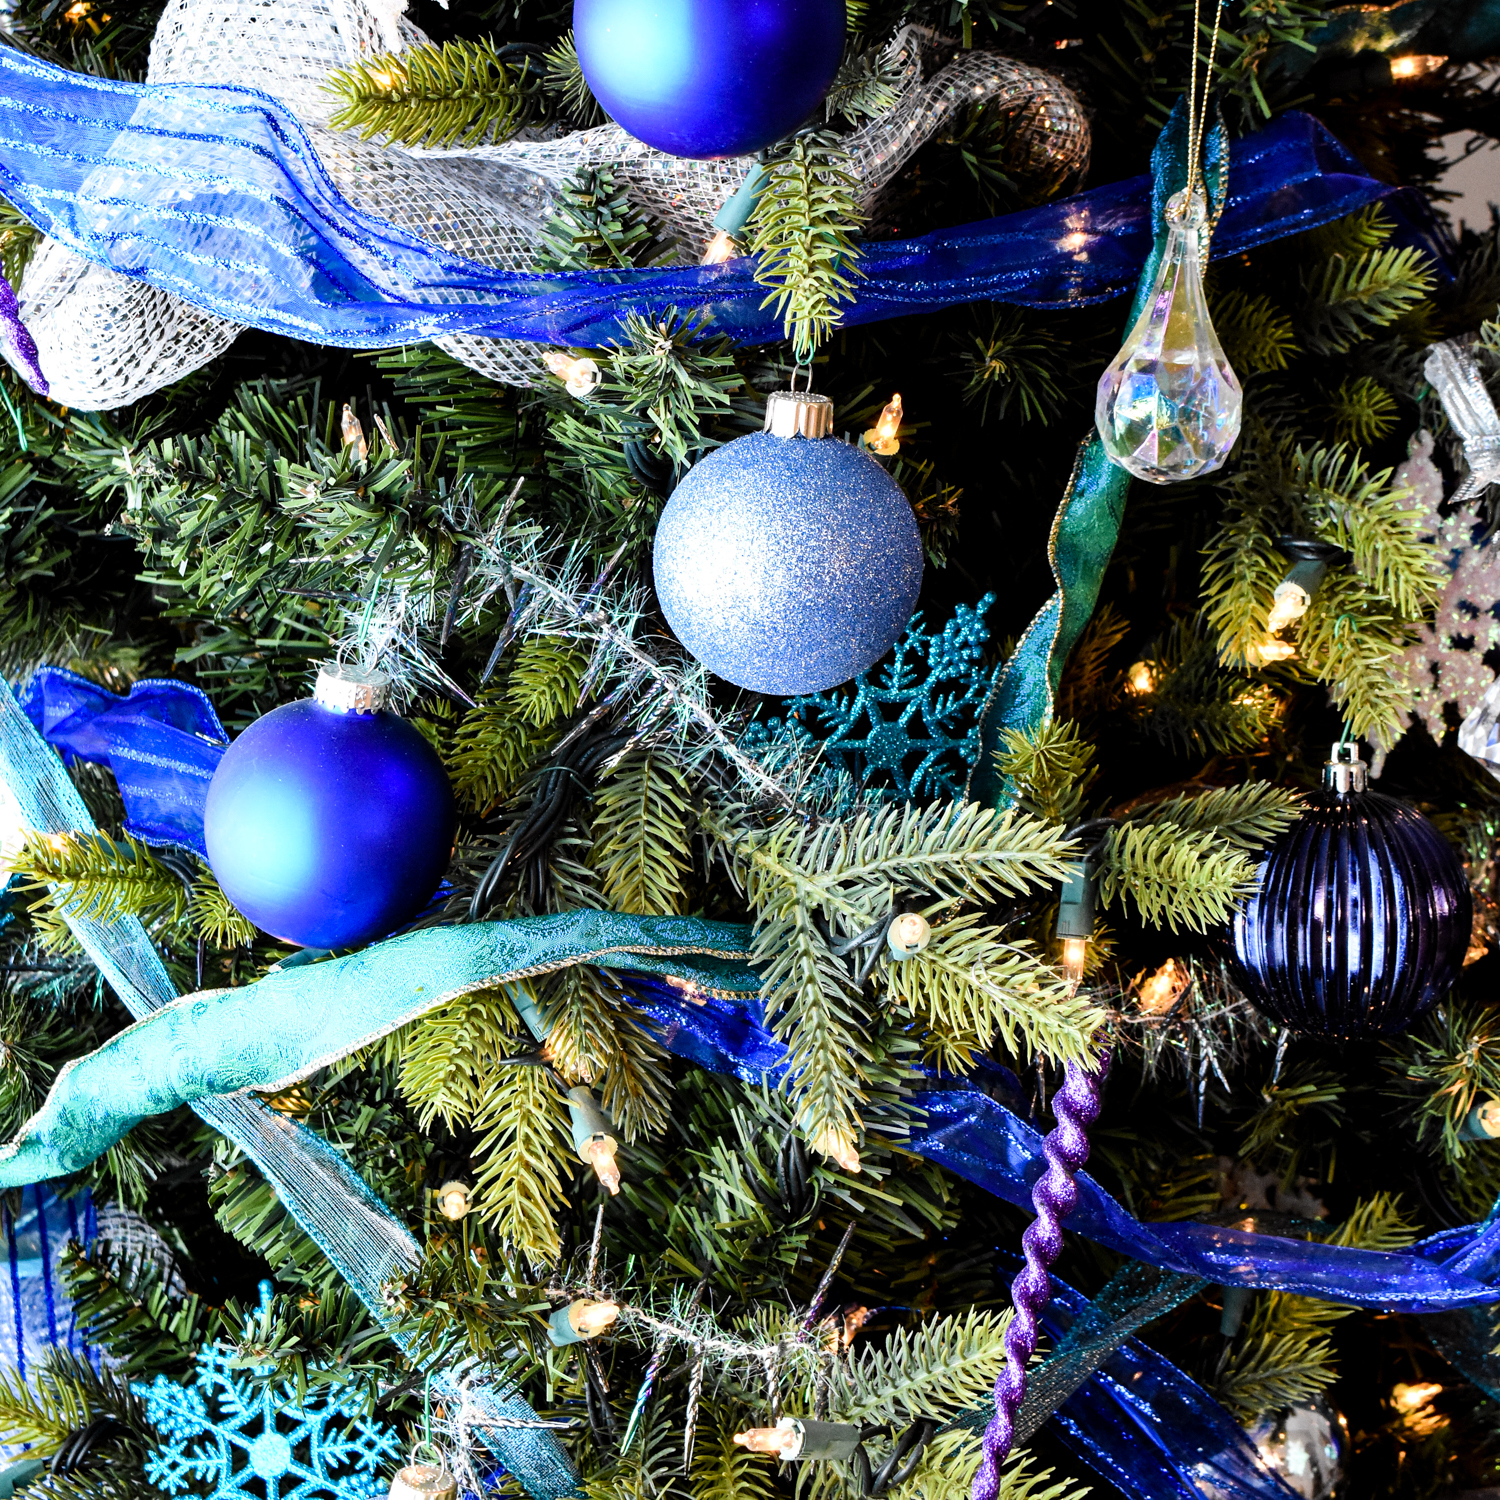 BLUE + GREEN CHRISTMAS TREE AND MANTEL